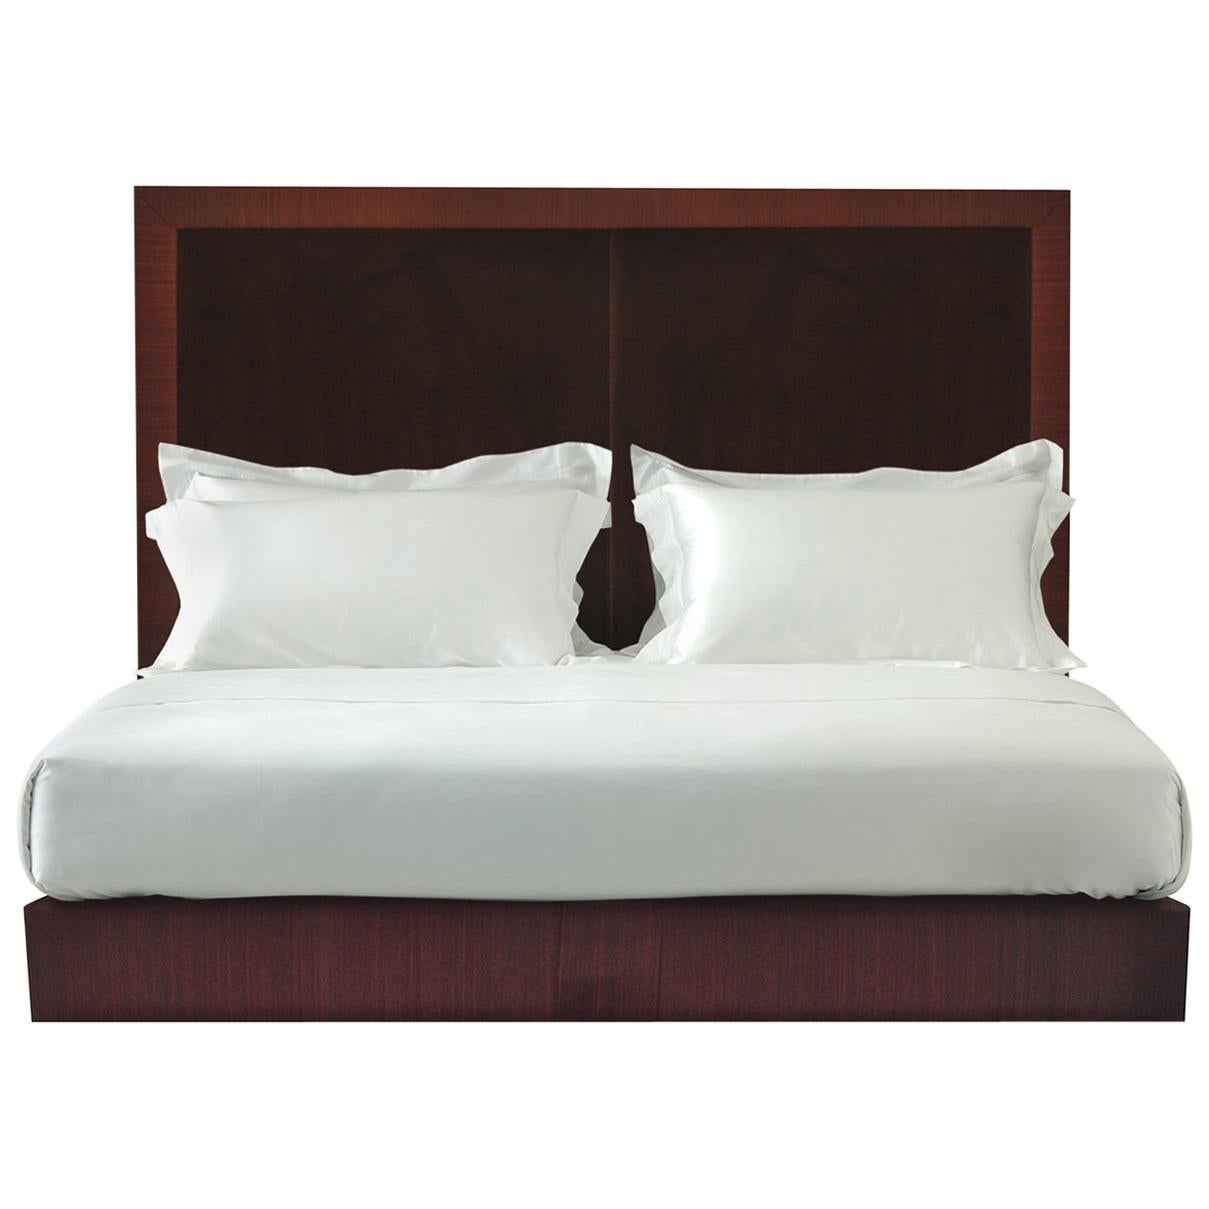 Savoir Max Headboard & Nº1 Bed Set, Handmade in London, California King Size For Sale